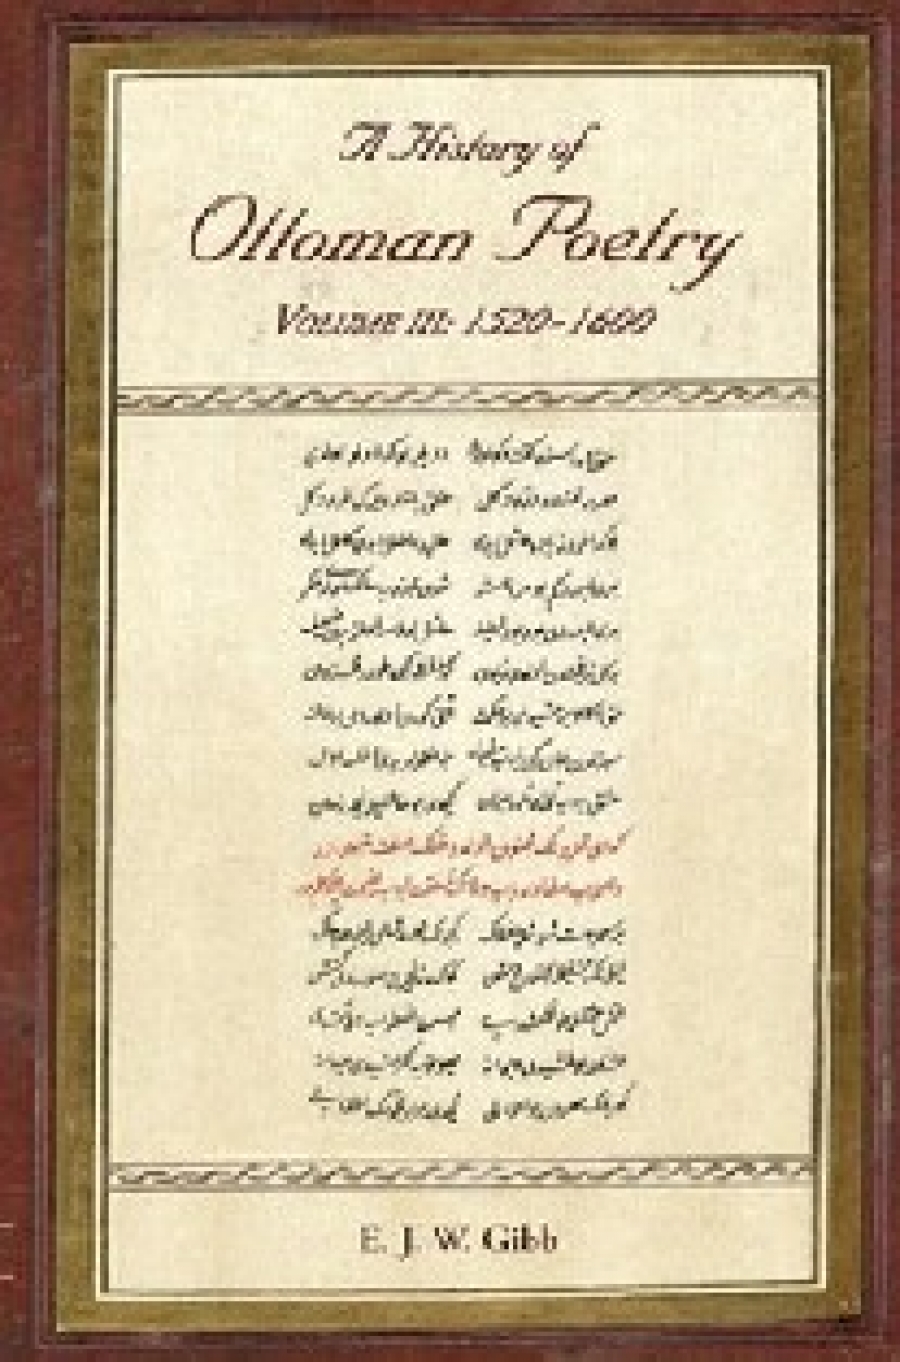 Gibb E J W A History of Ottoman Poetry Volume III 